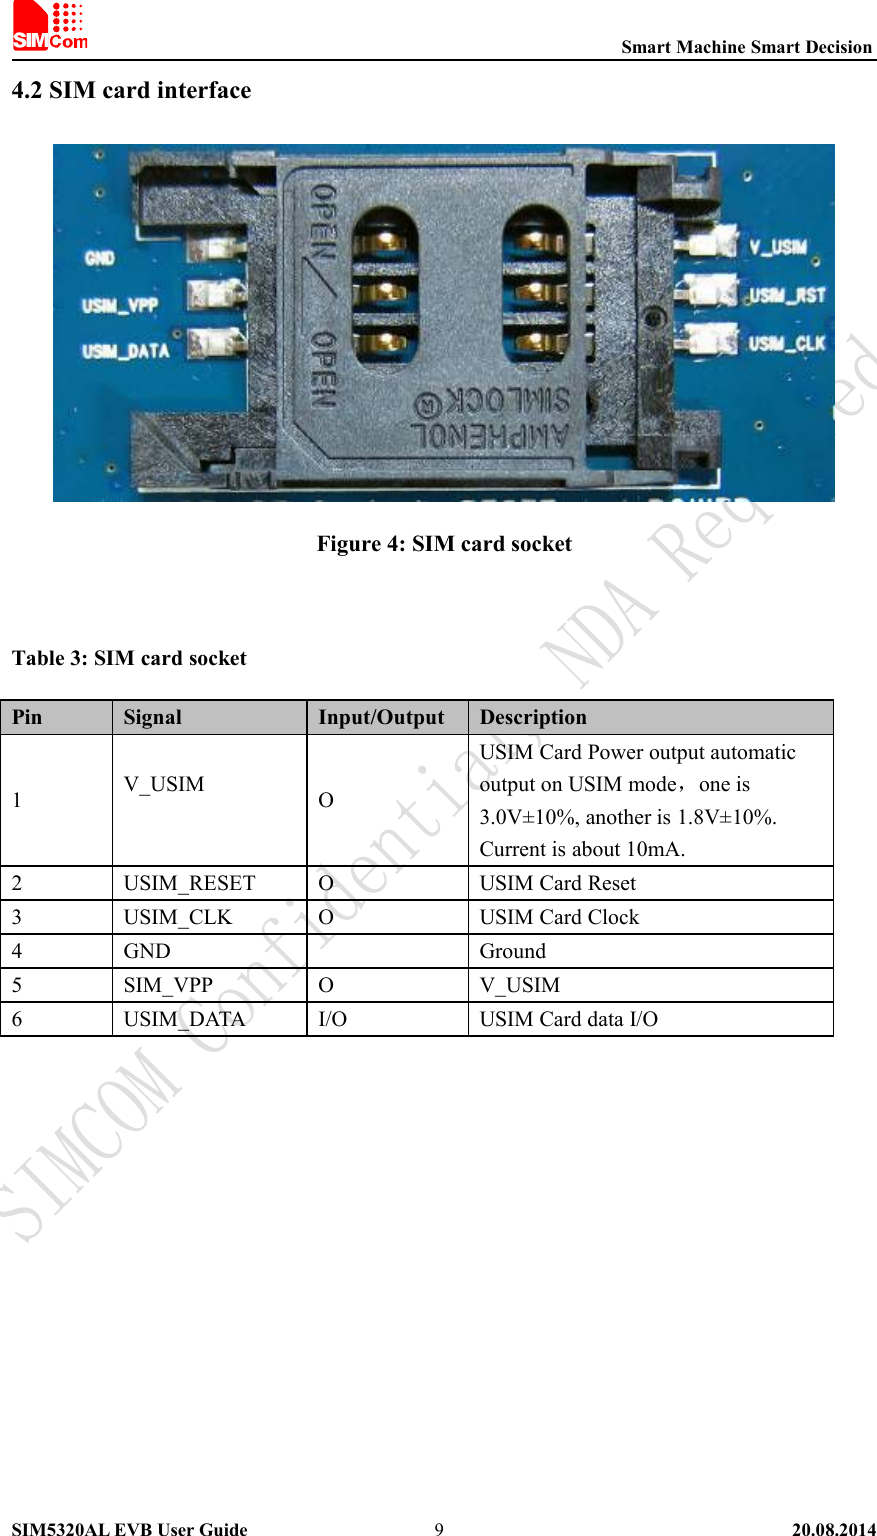 Smart Machine Smart DecisionSIM5320AL EVB User Guide 20.08.201494.2 SIM card interfaceFigure 4: SIM card socketTable 3: SIM card socketPin Signal Input/Output Description1V_USIM OUSIM Card Power output automaticoutput on USIM mode，one is3.0V±10%, another is 1.8V±10%.Current is about 10mA.2 USIM_RESET O USIM Card Reset3 USIM_CLK O USIM Card Clock4 GND Ground5 SIM_VPP OV_USIM6 USIM_DATA I/OUSIM Card data I/O